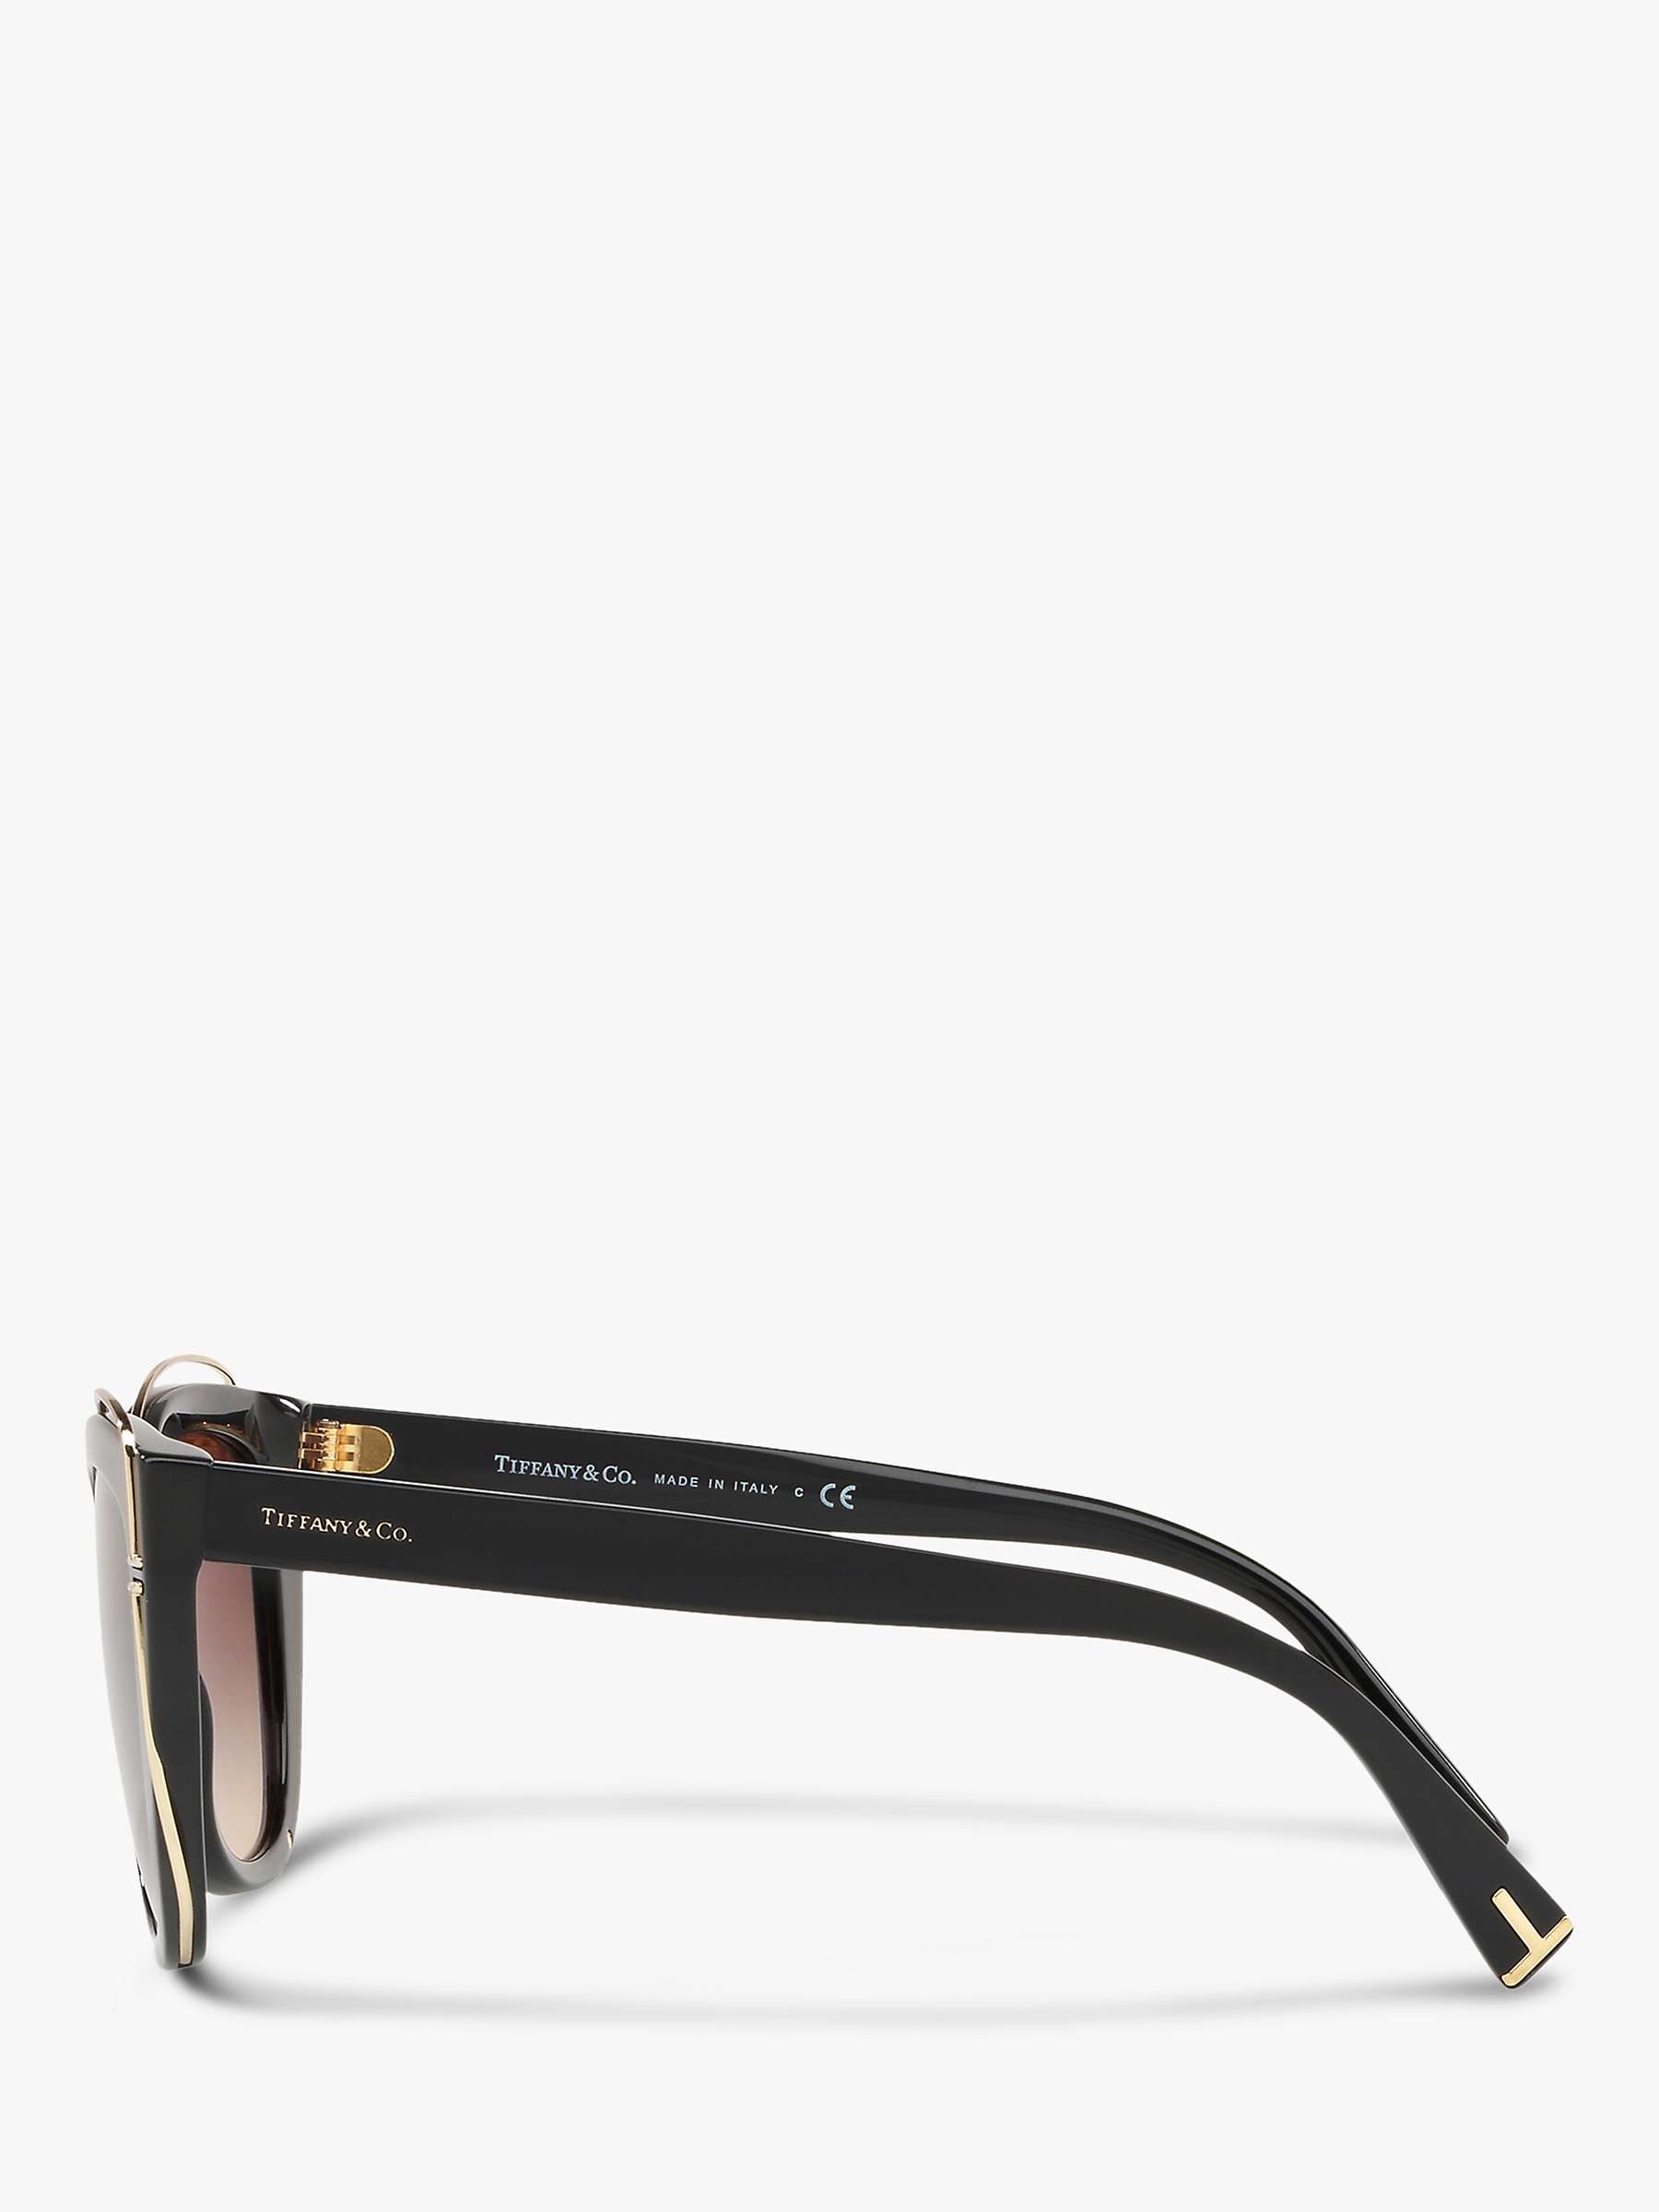 Buy Tiffany & Co TF4148 Women's Cat's Eye Sunglasses, Black/Brown Online at johnlewis.com